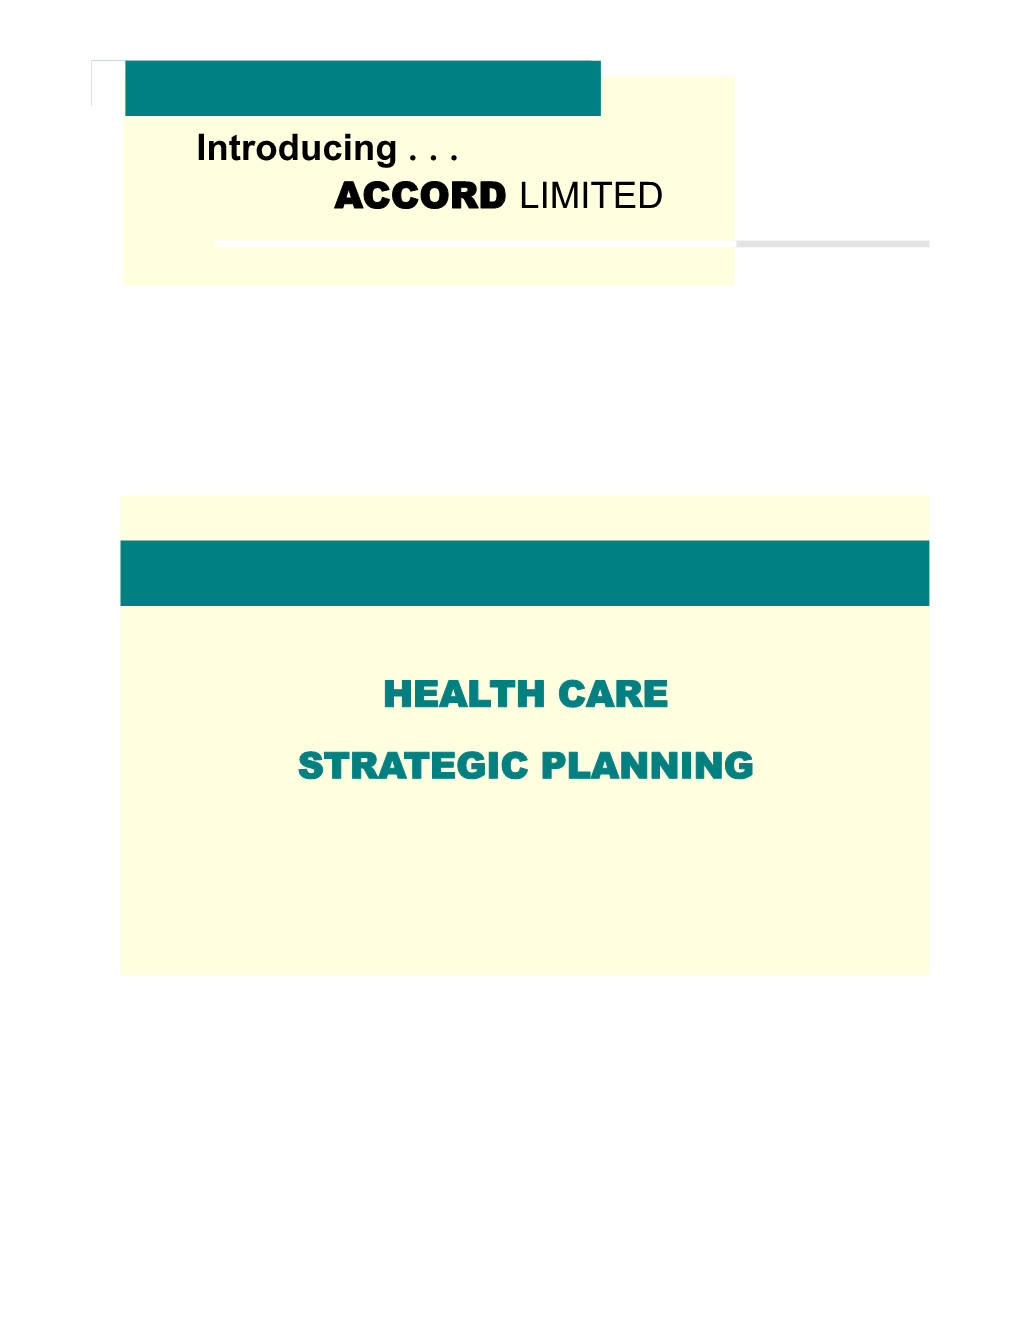 Health Care Strategic Planning